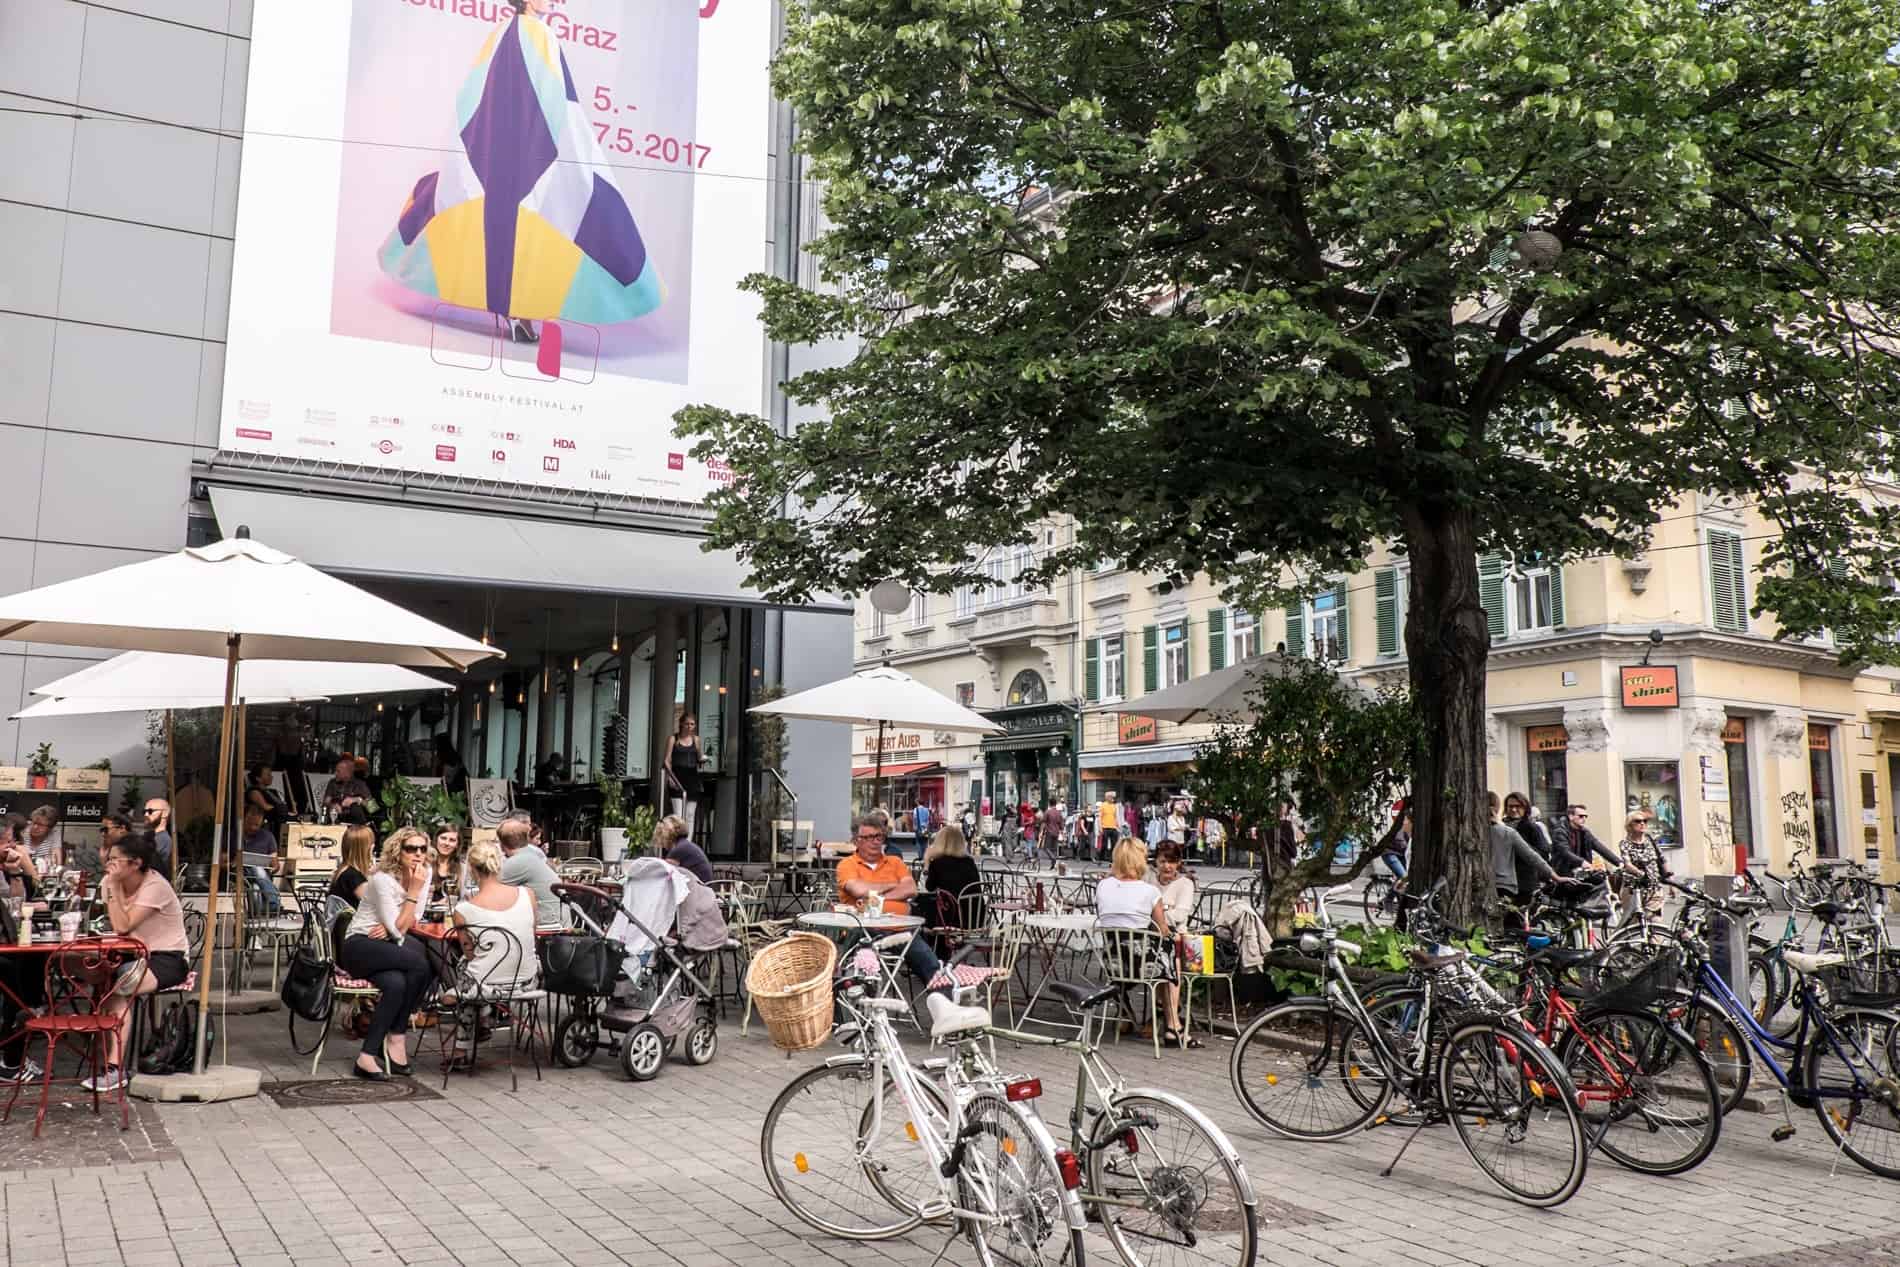 People eat outside in the modern area of Graz city, Austria.